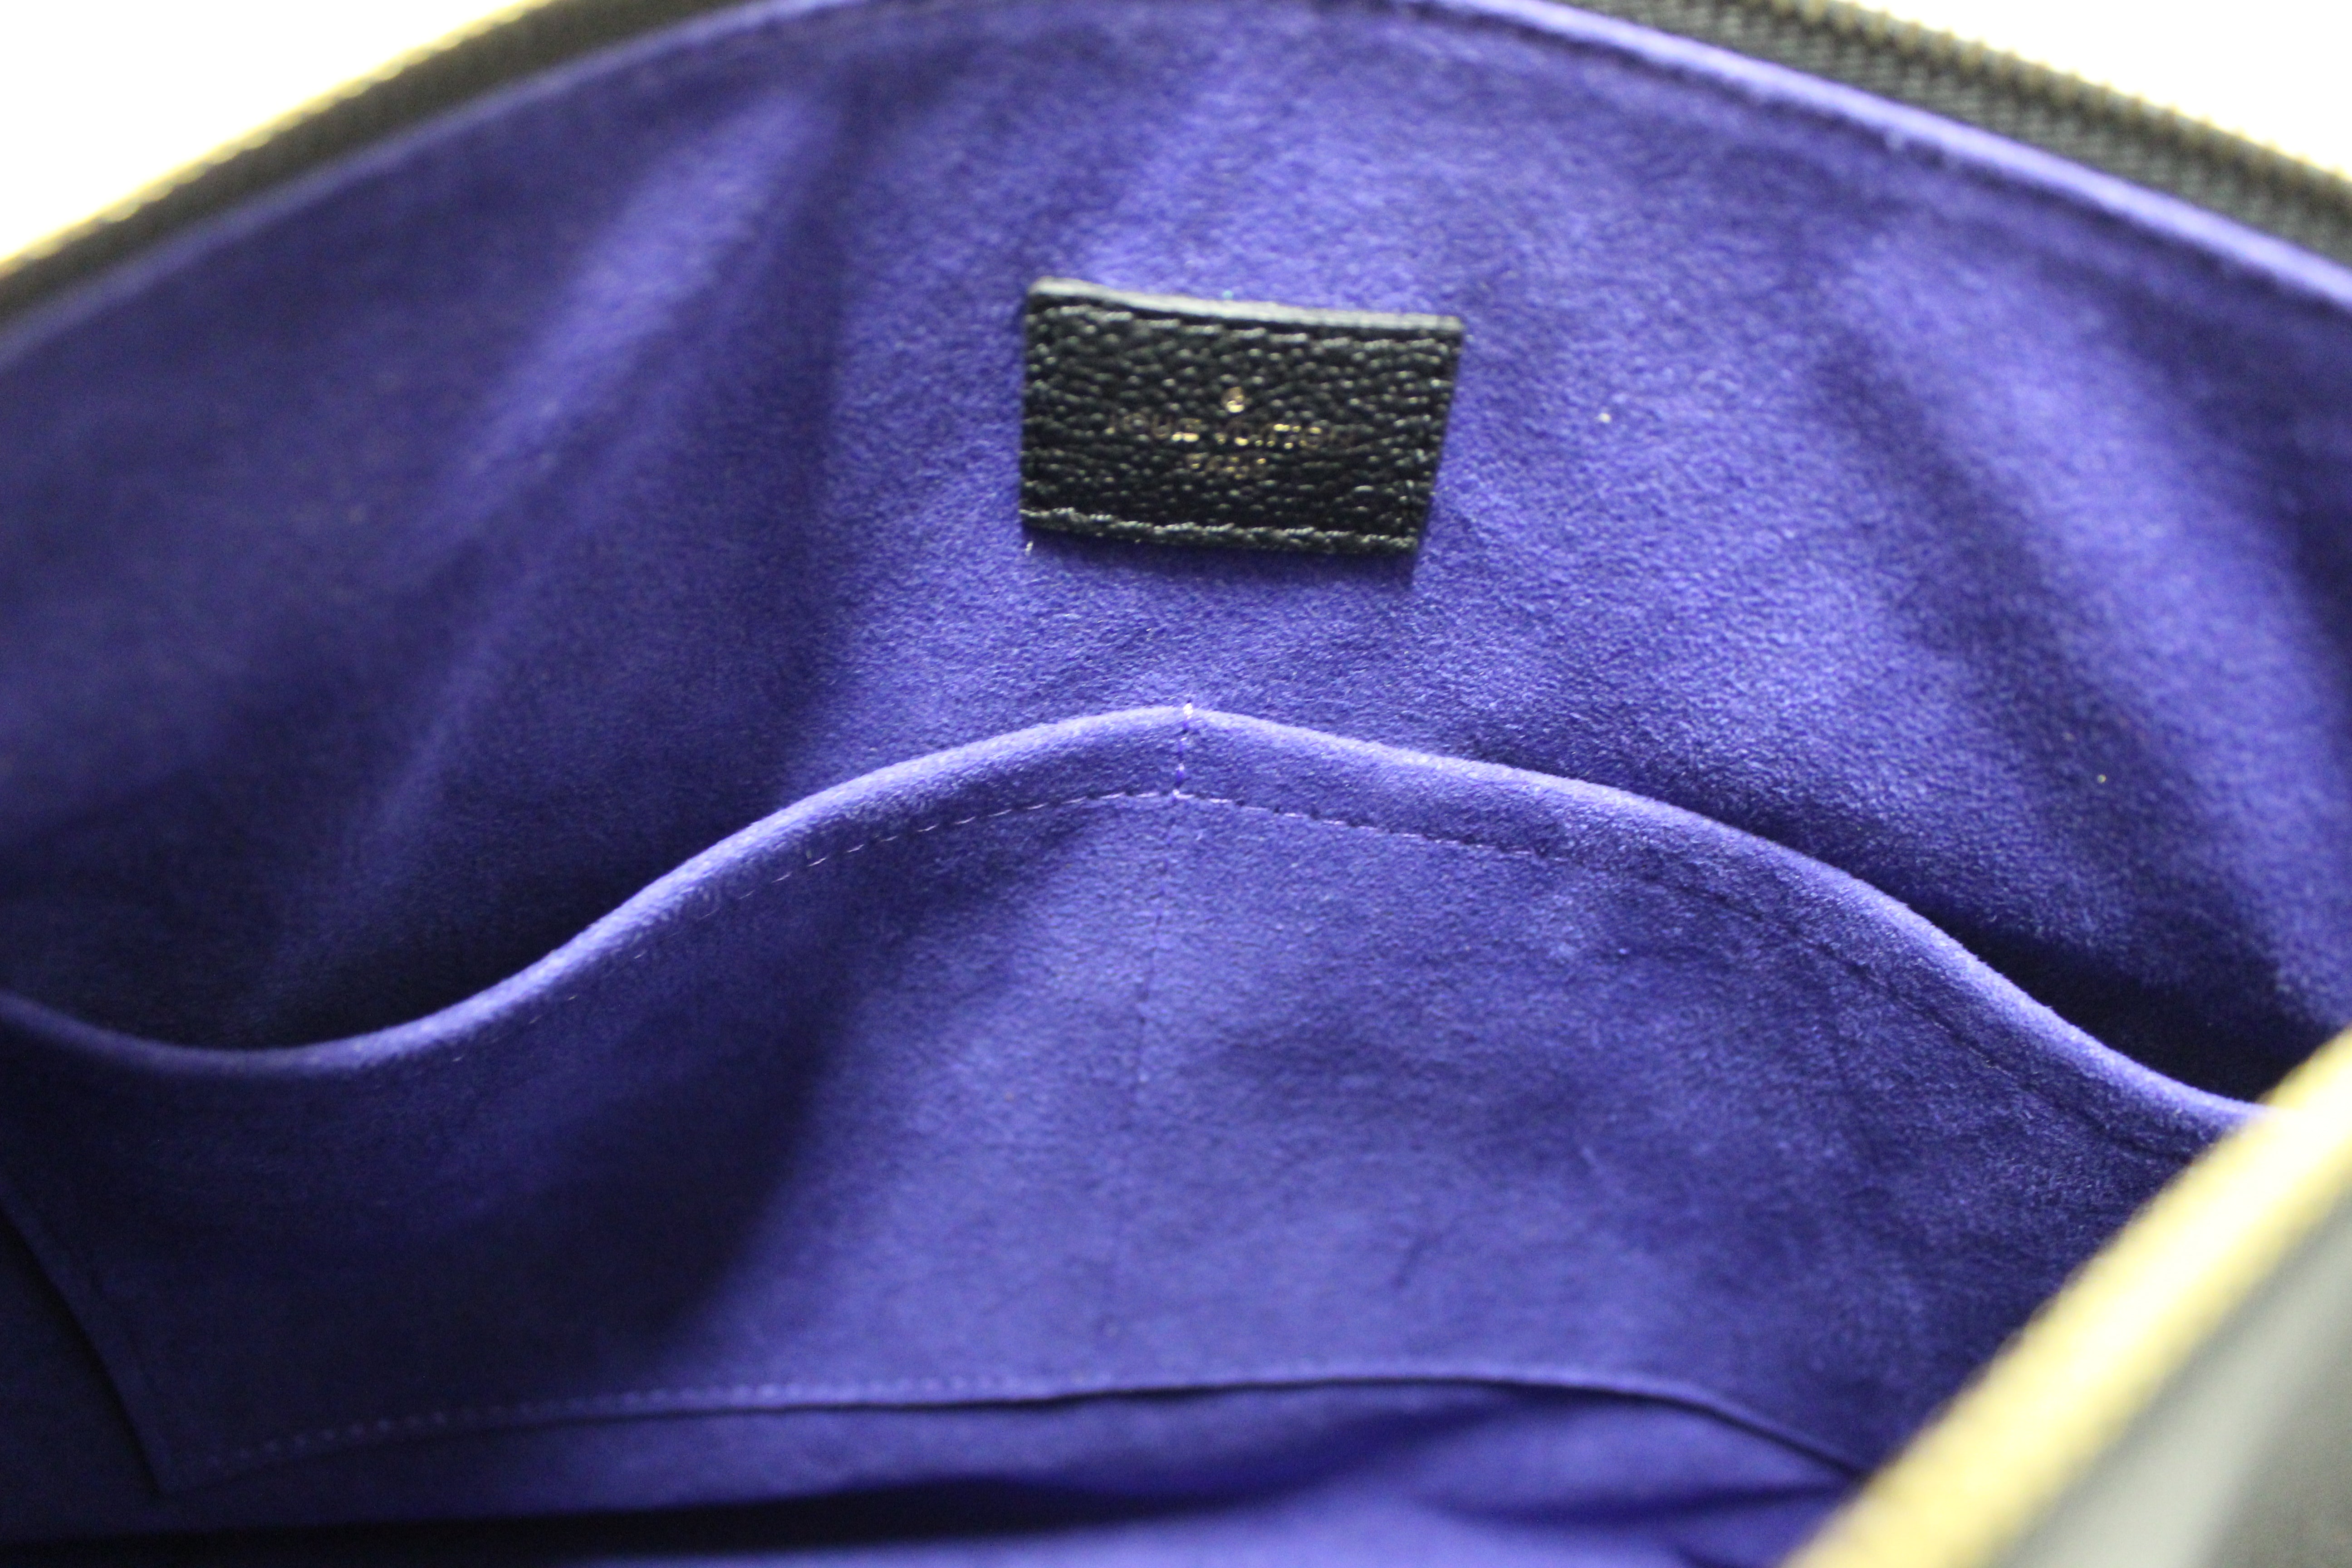 Authentic Louis Vuitton Black Monogram Empreinte Leather Maida Hobo Bag